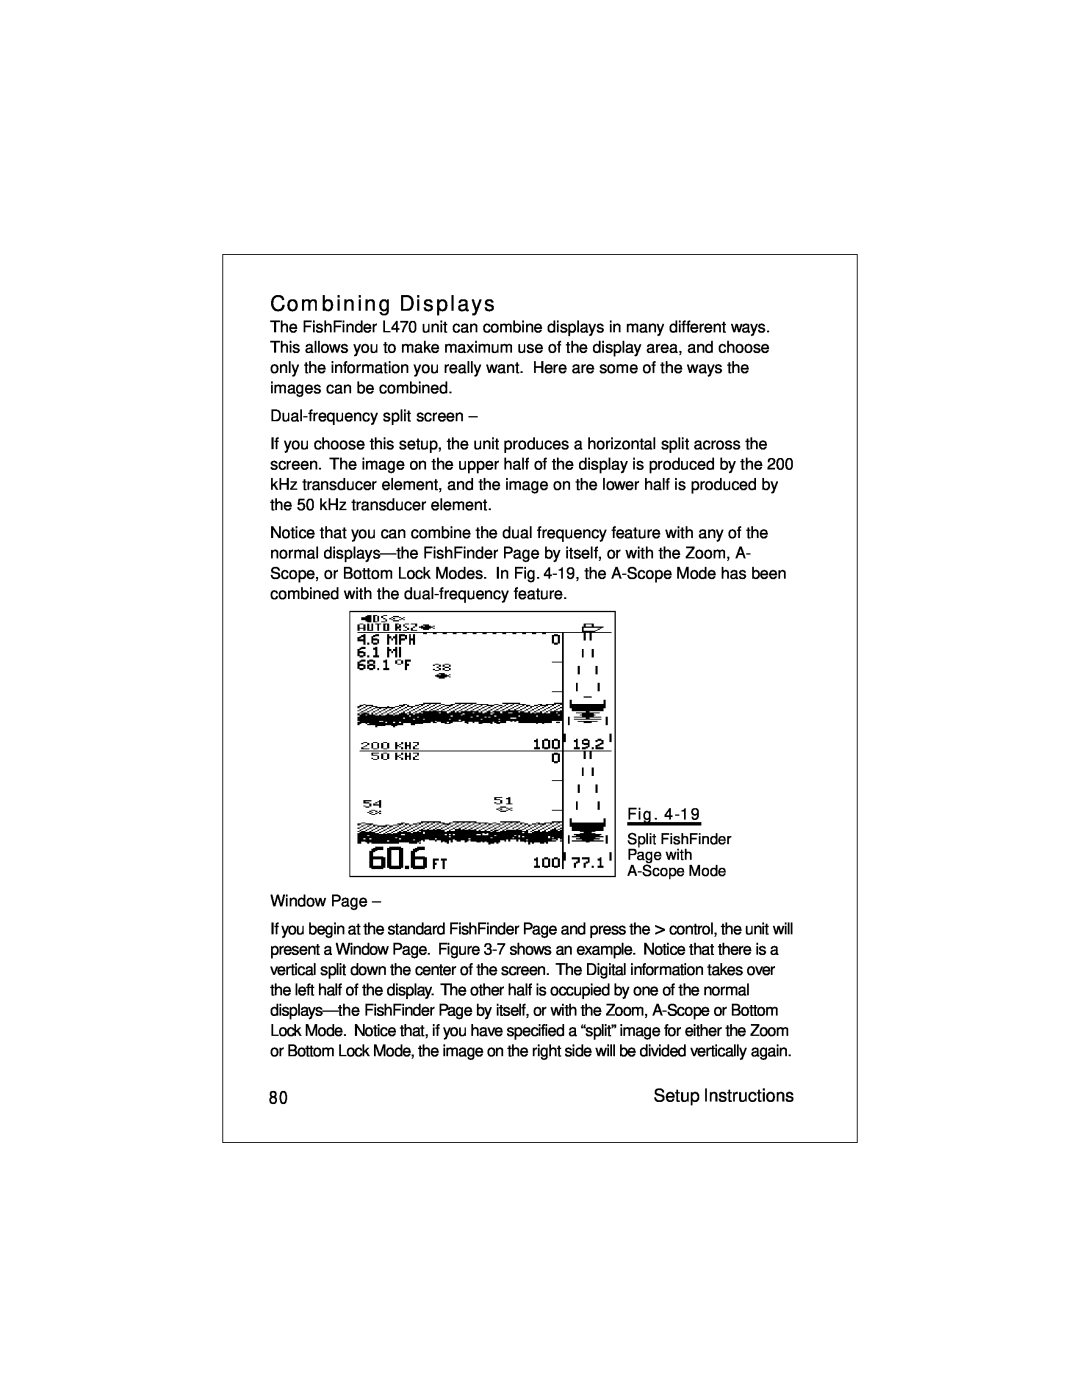 Raymarine L470 instruction manual Combining Displays, Setup Instructions 